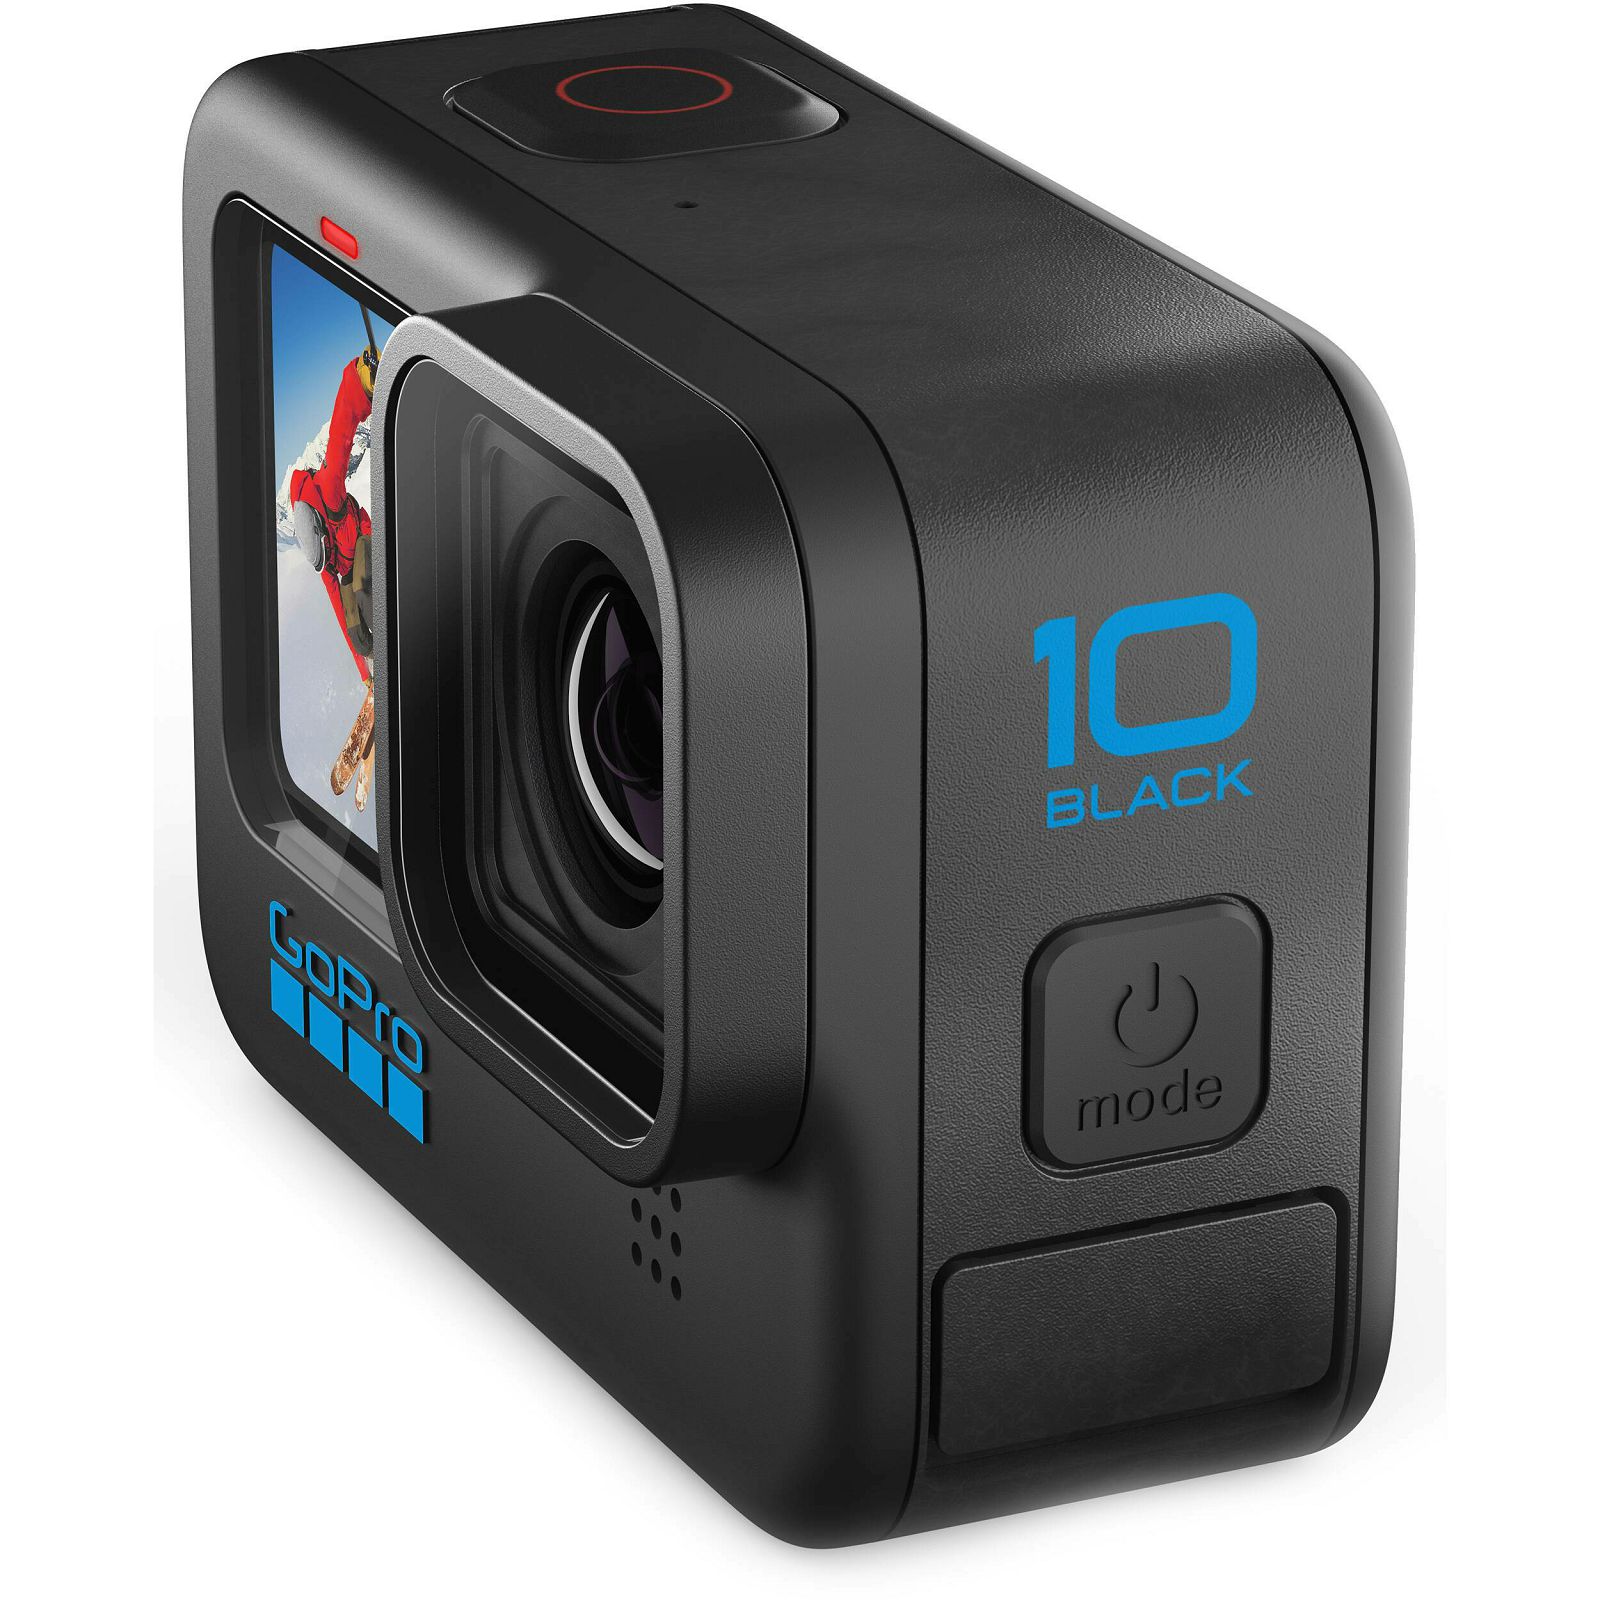 GoPro HERO10 Black 5K60 4K120 23MP GPS sportska akcijska kamera (CHDHX-101-RW)